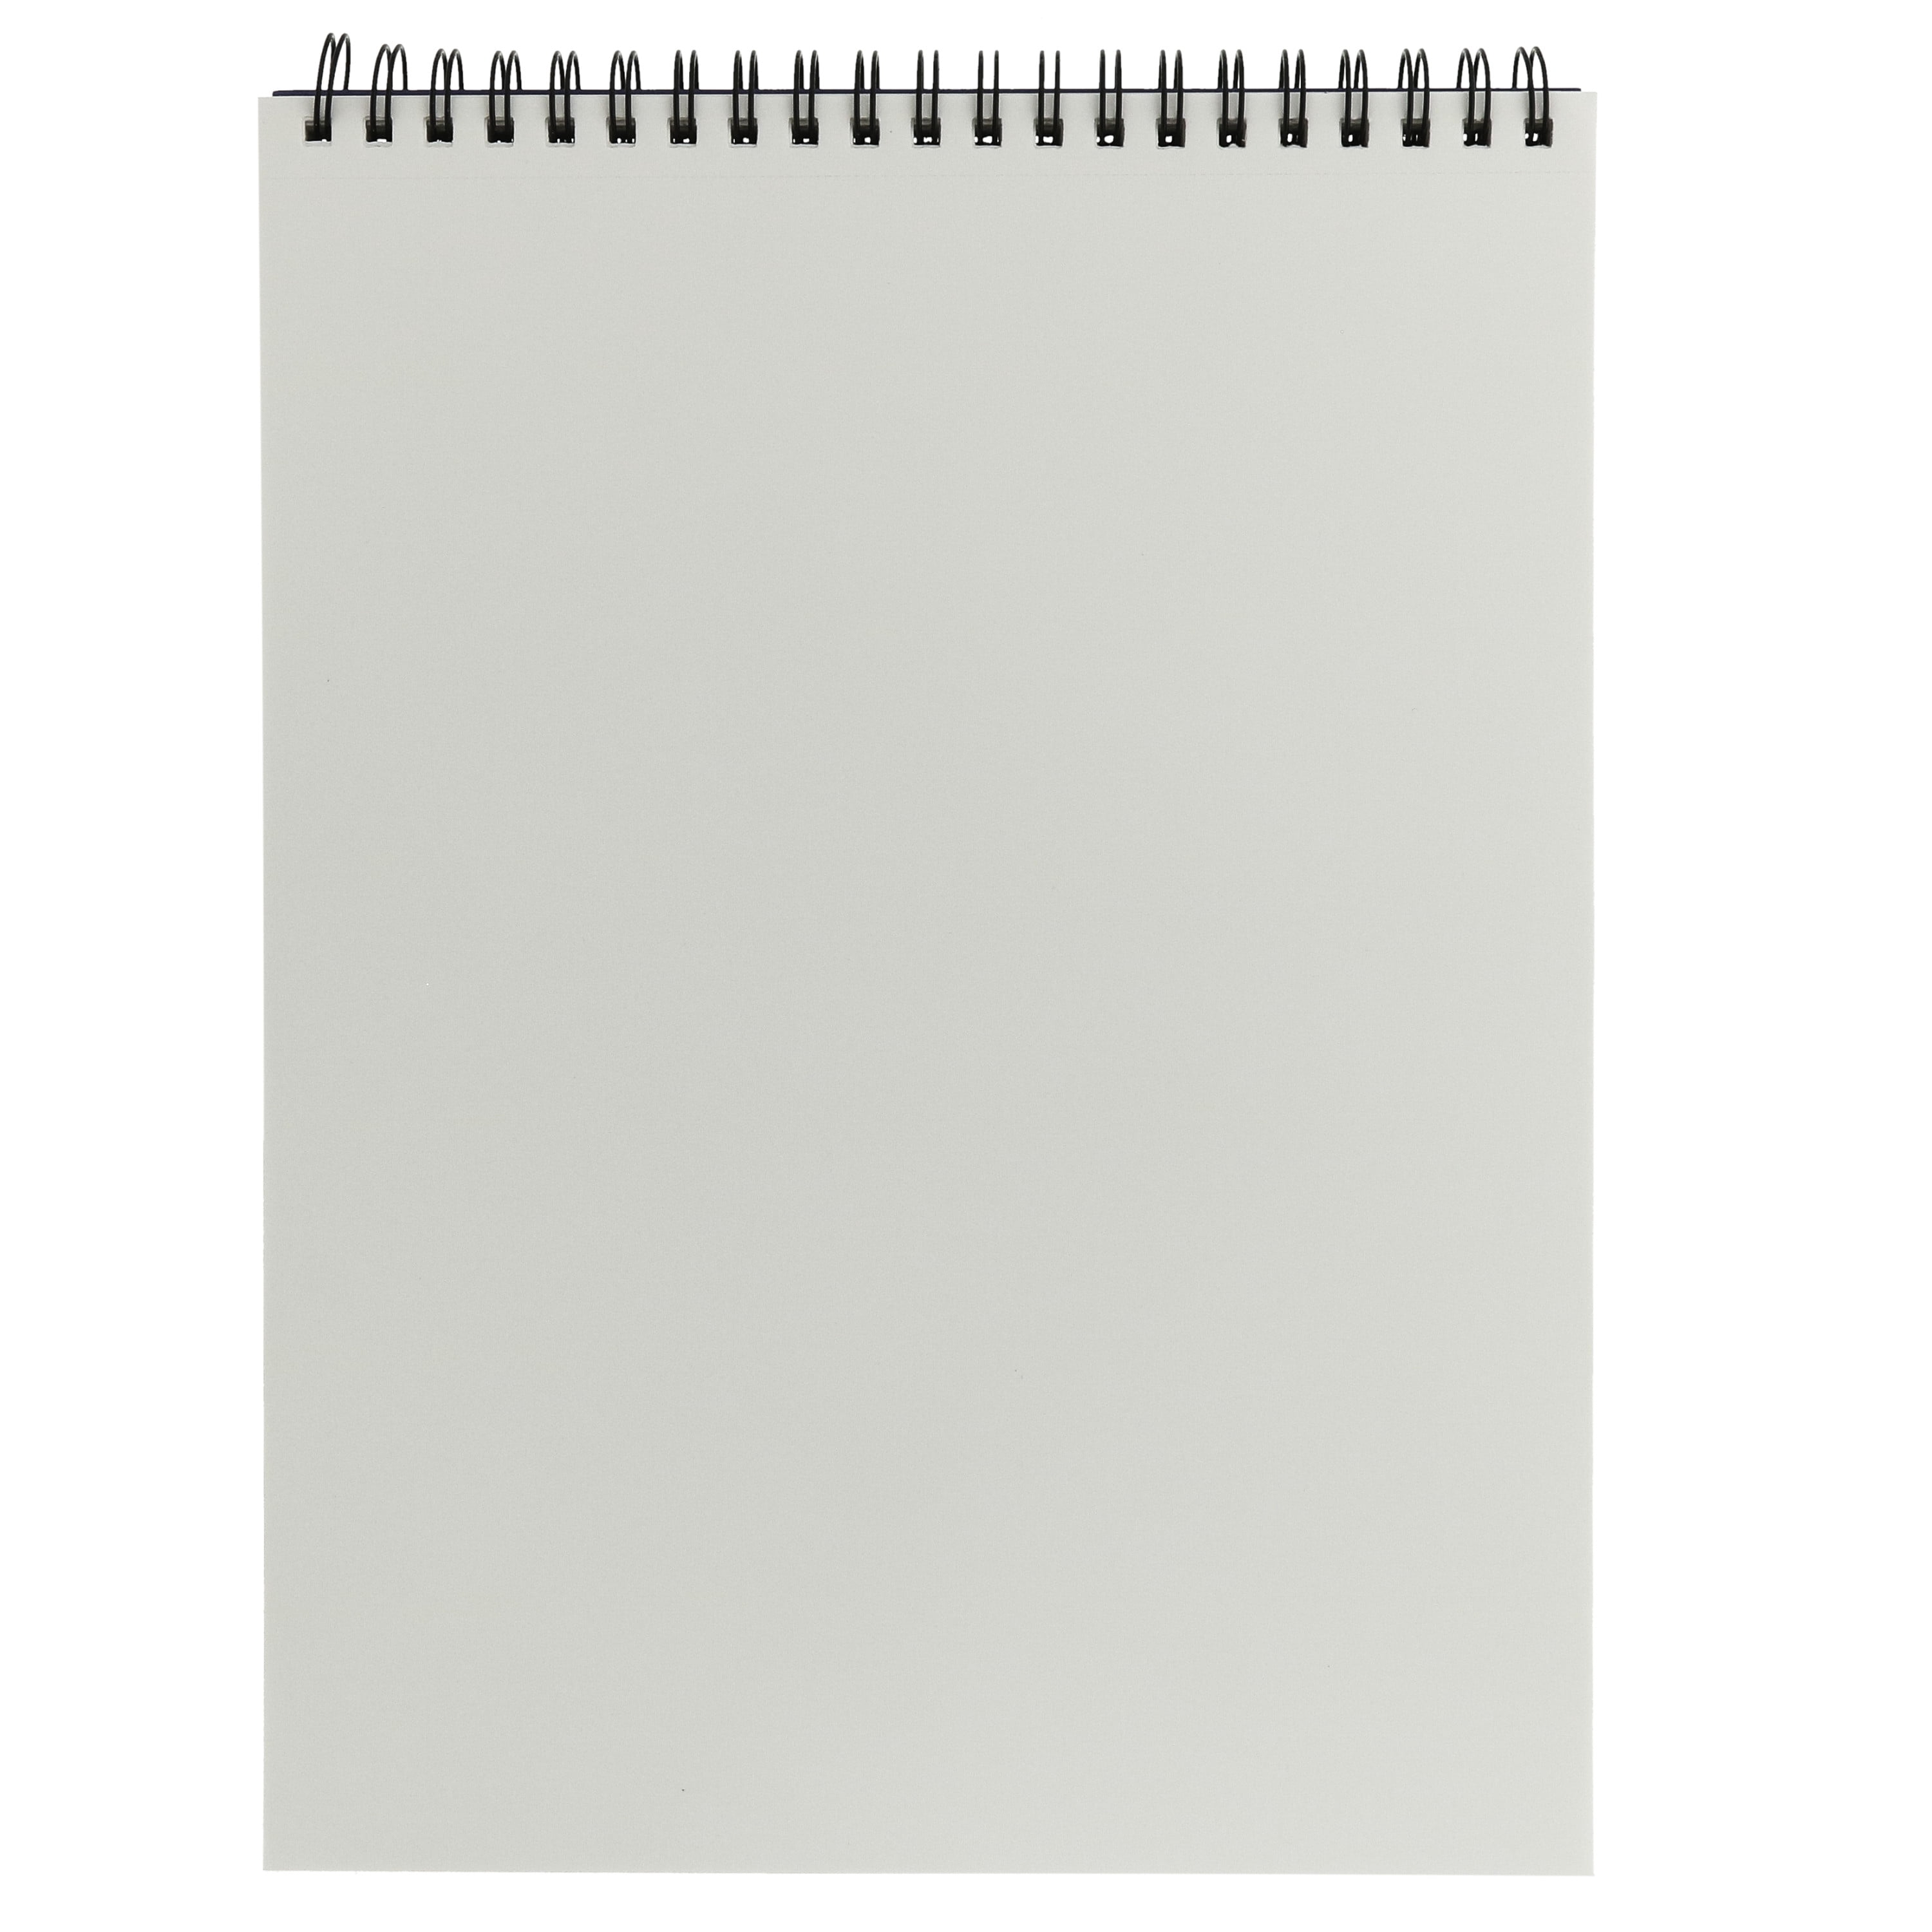 Fabriano Schizzi Sketch Pad, 90 gsm, 8 x 11, 120 Sheets, White